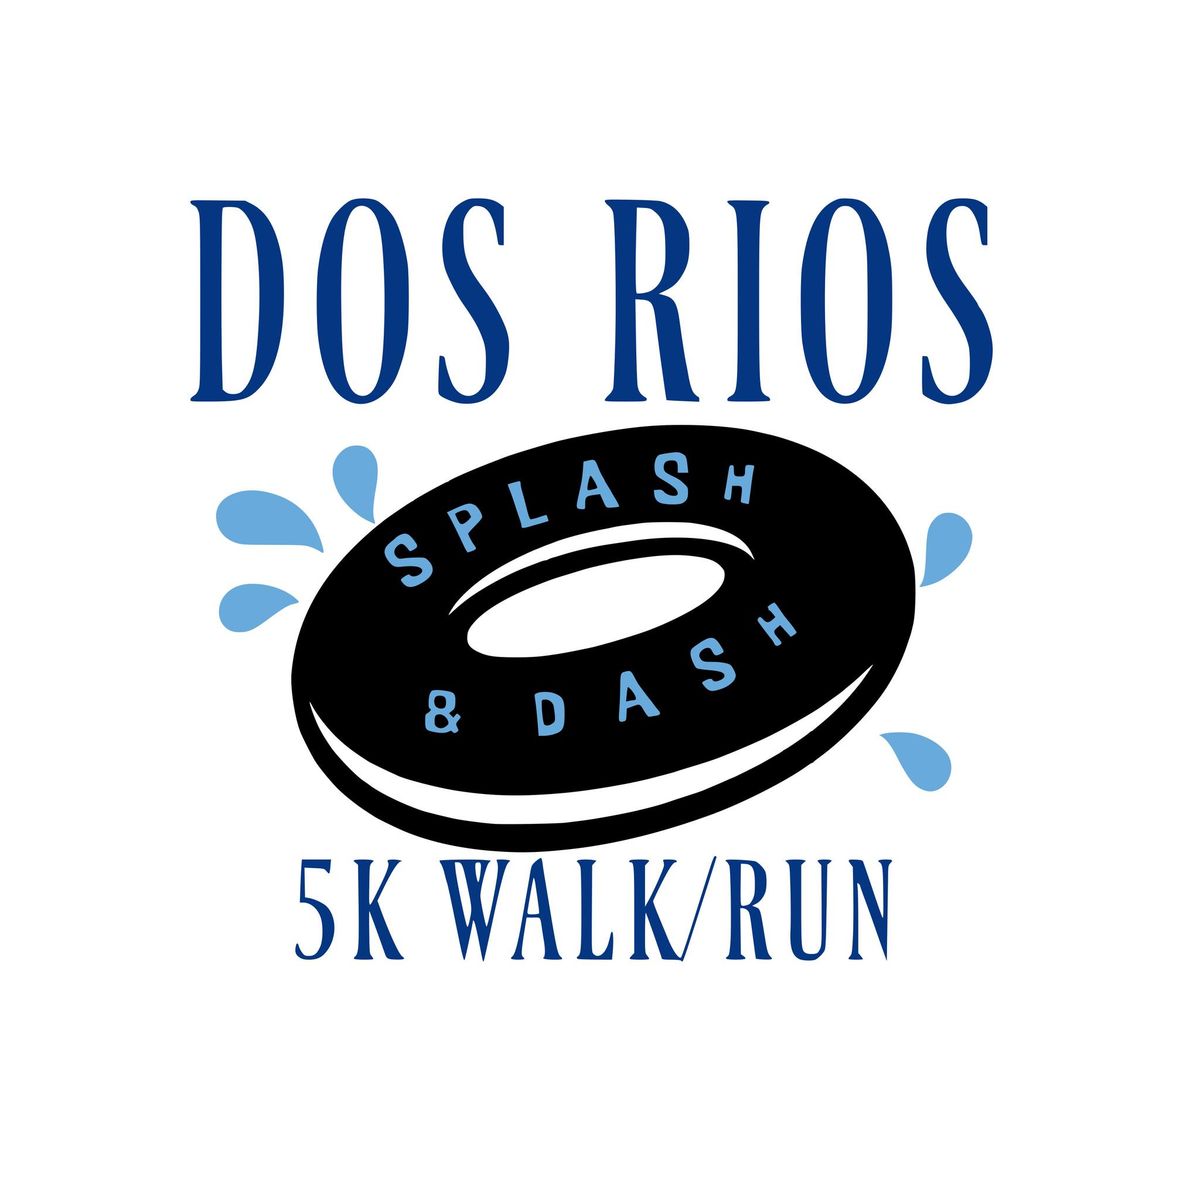  Dos Rios 5K Splash and Dash